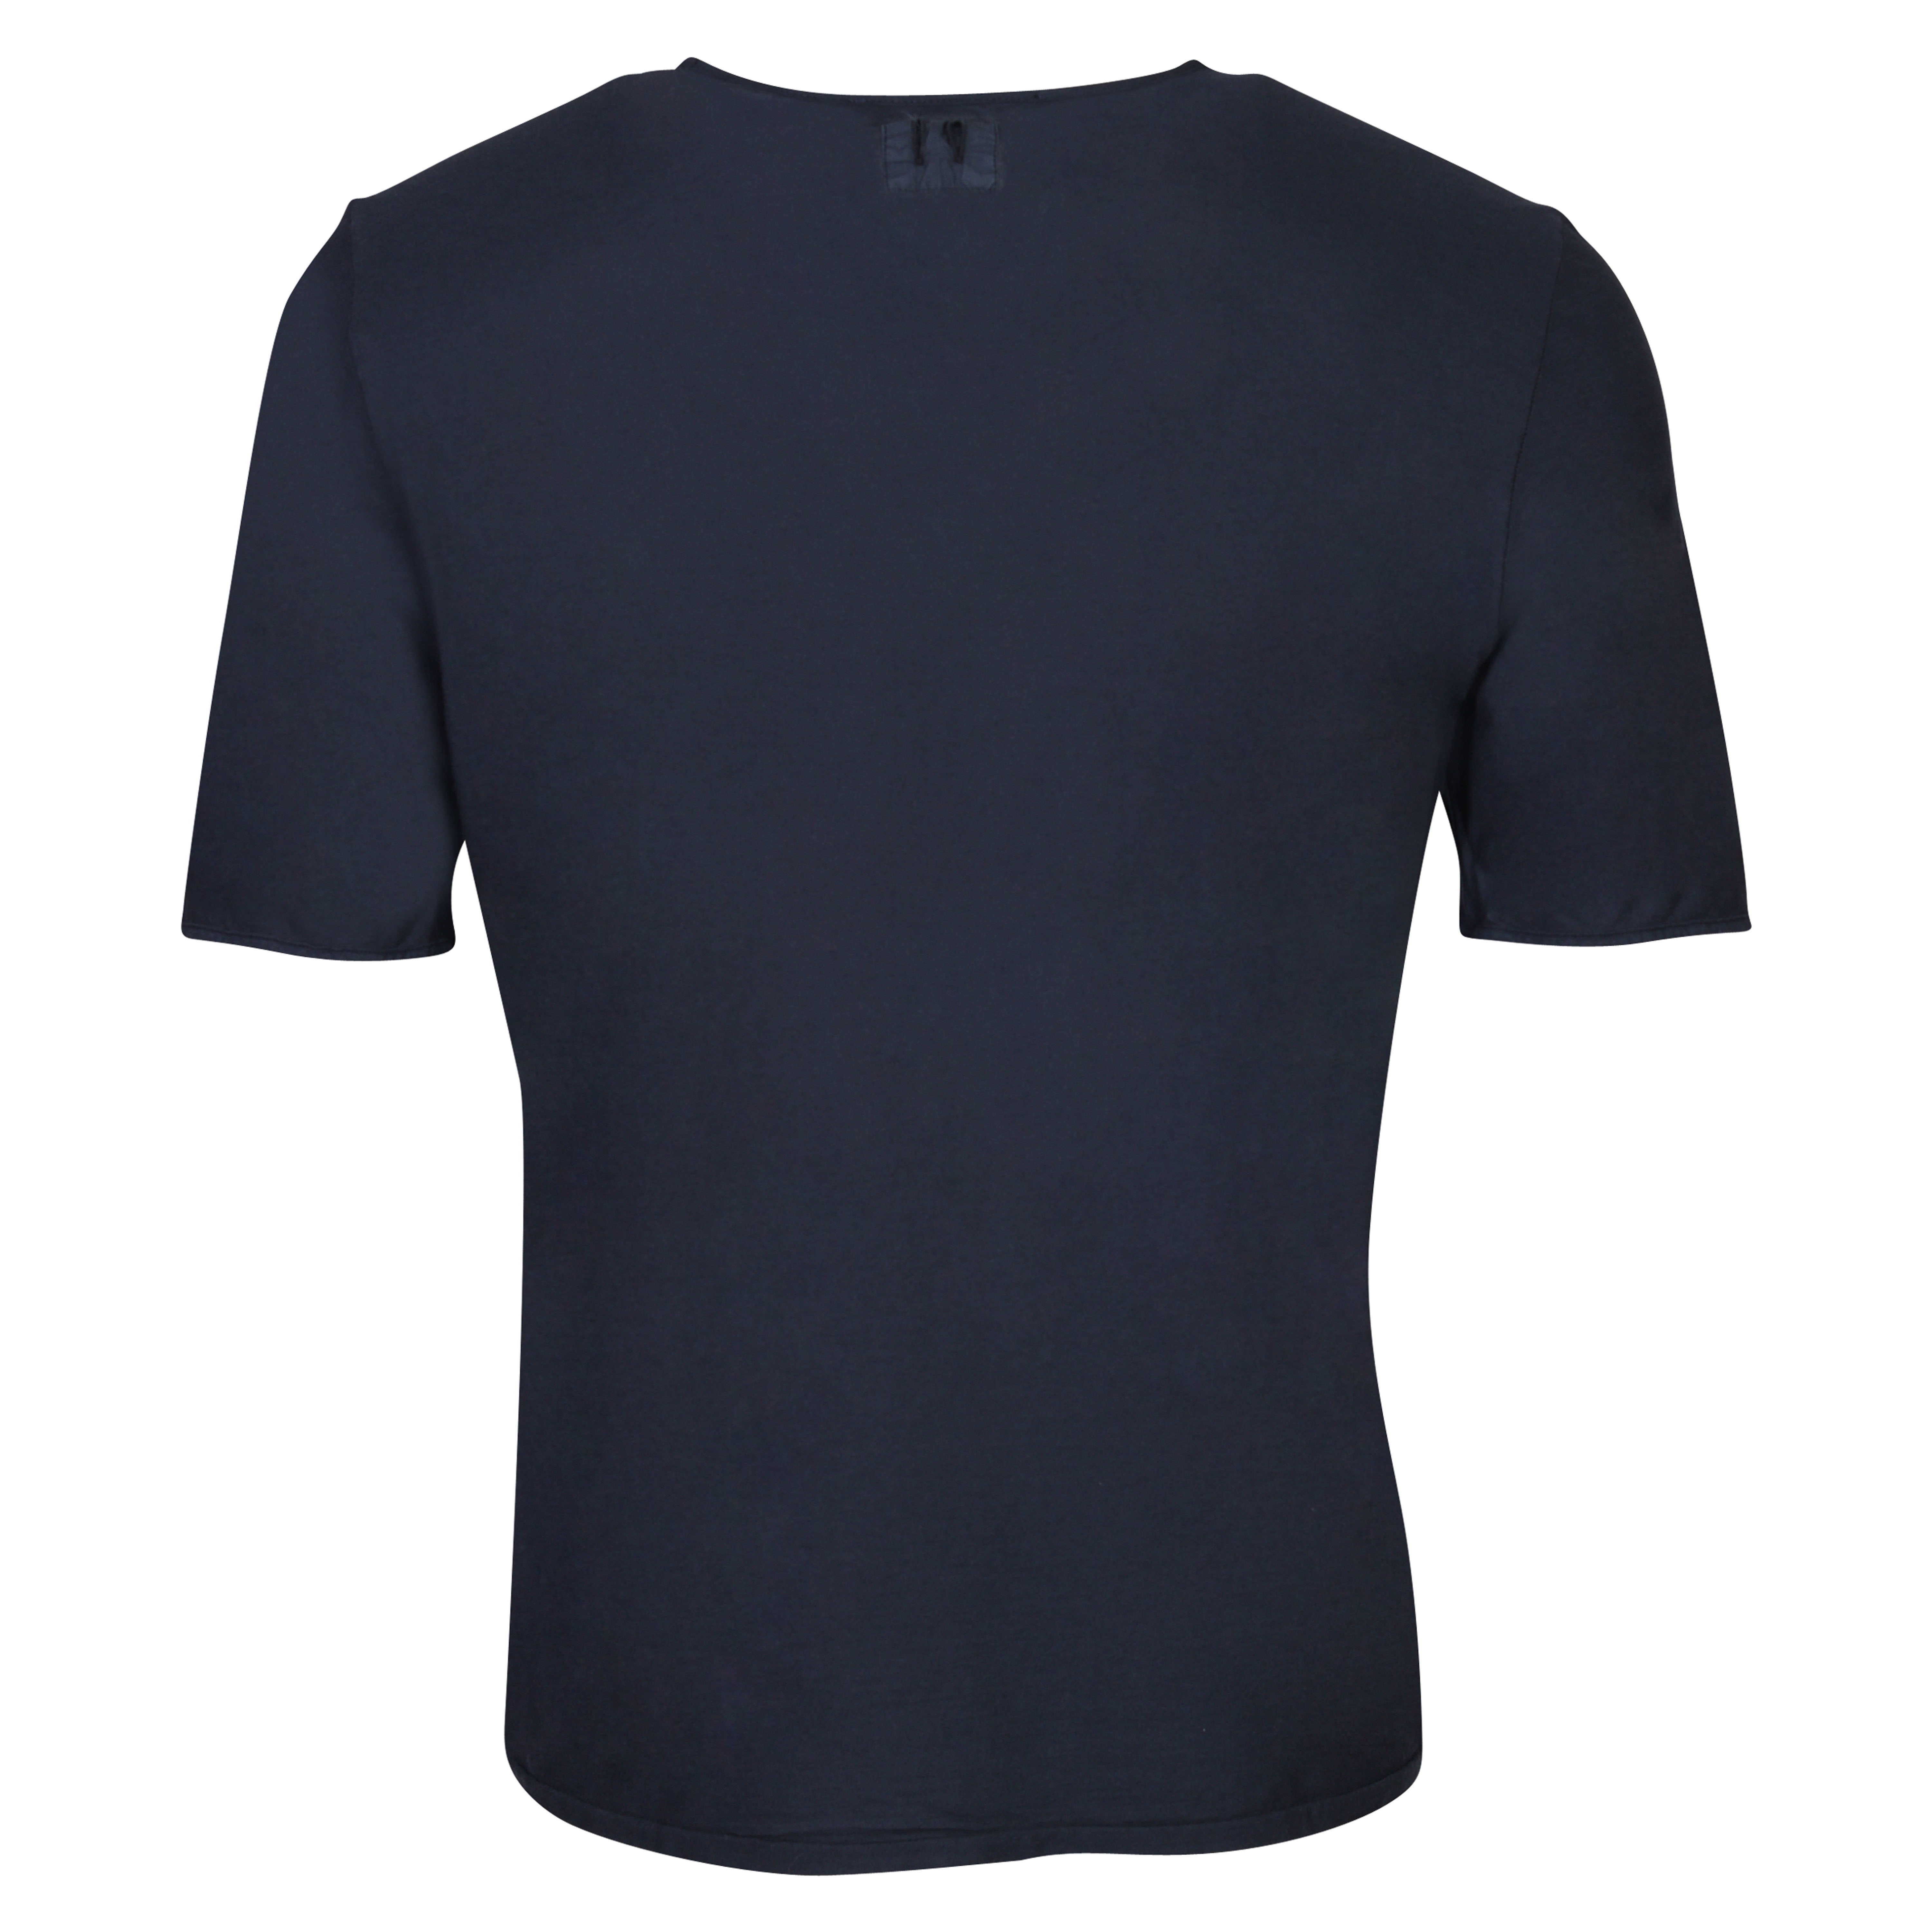 Hannes Roether V-Neck T-Shirt in Dark Navy L